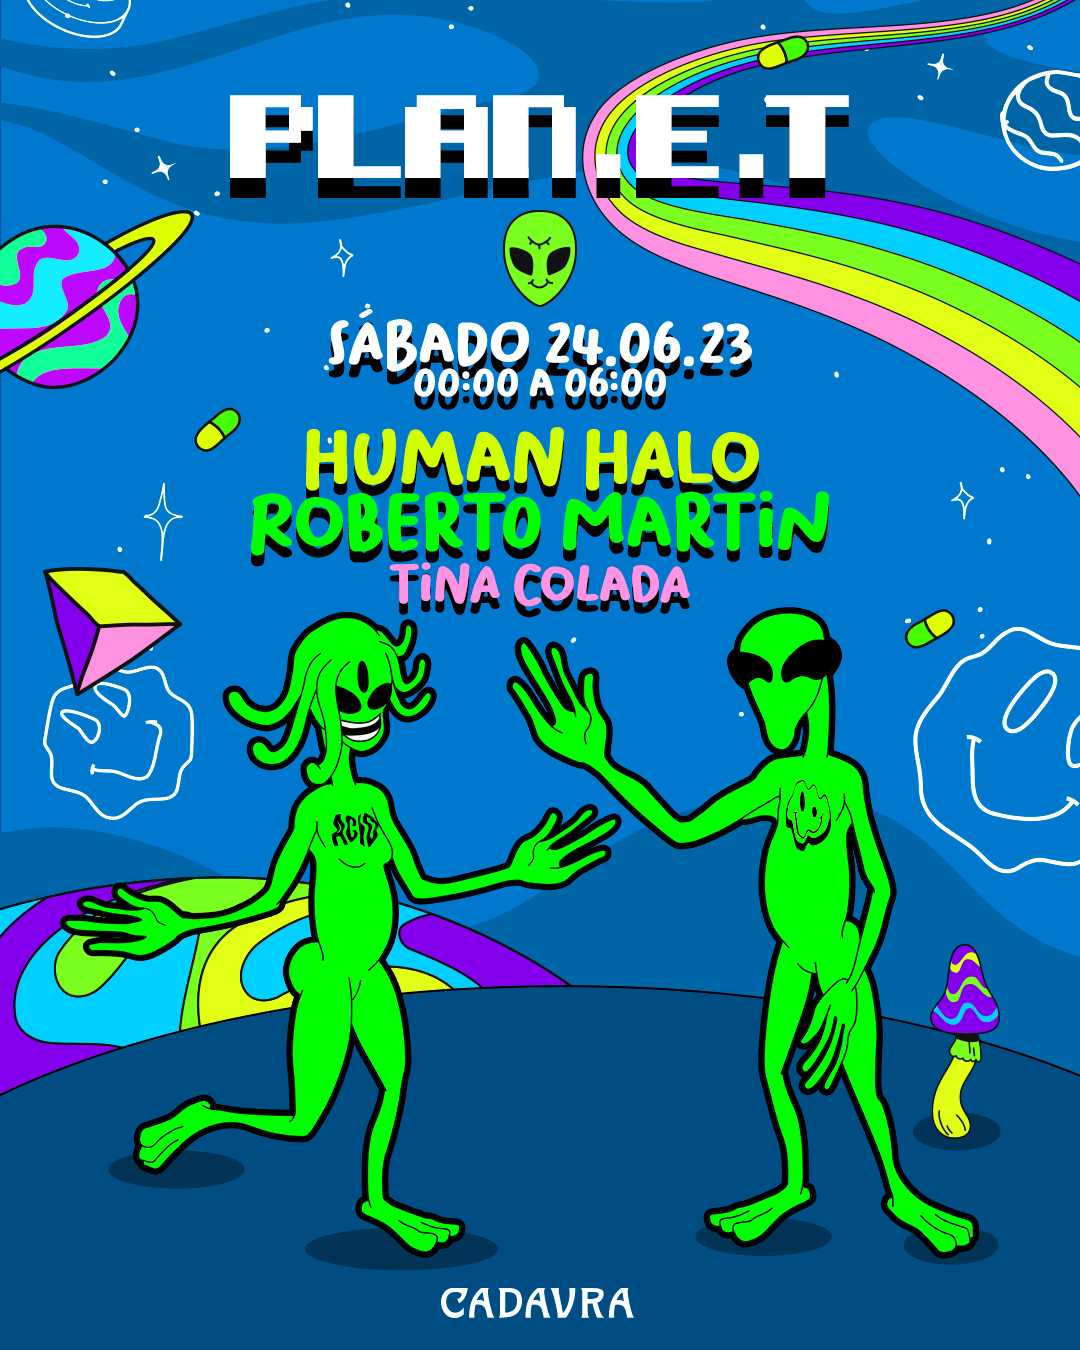 PlanE.T. invites Human Halo, Roberto Martin & Tina Colada - フライヤー表